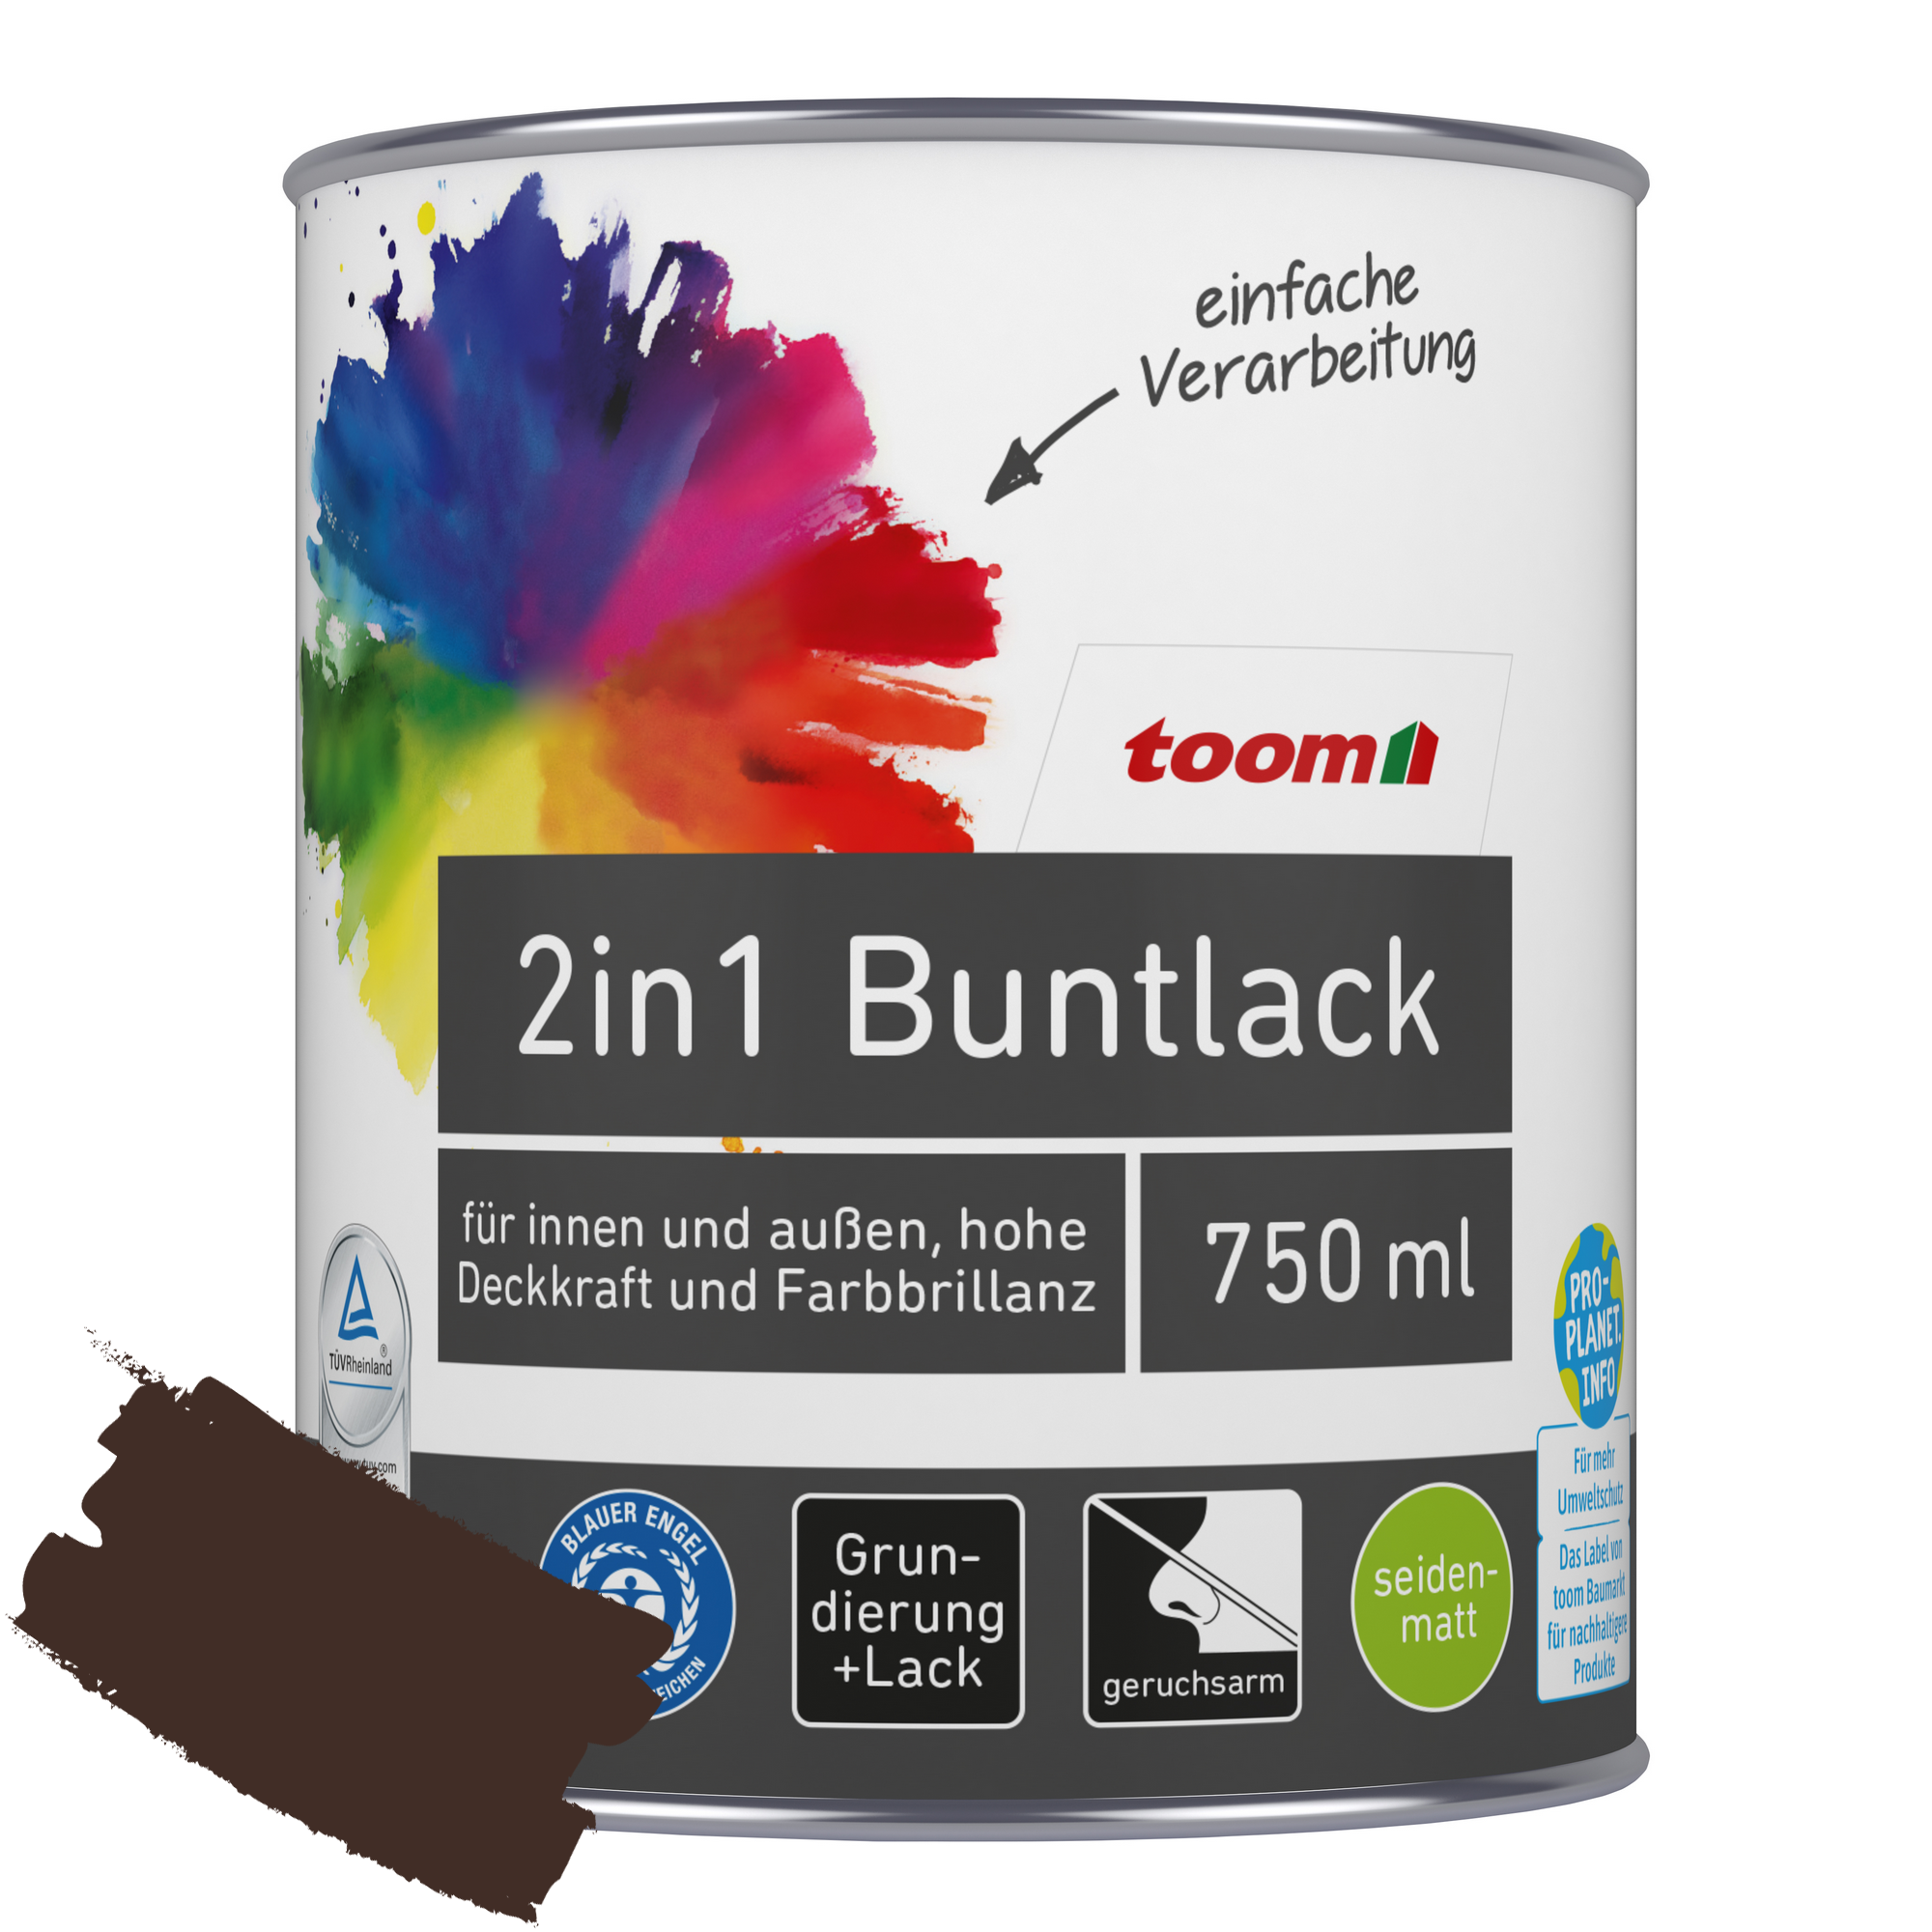 2in1 Buntlack 'Edelbraun' schokobraun seidenmatt 750 ml + product picture